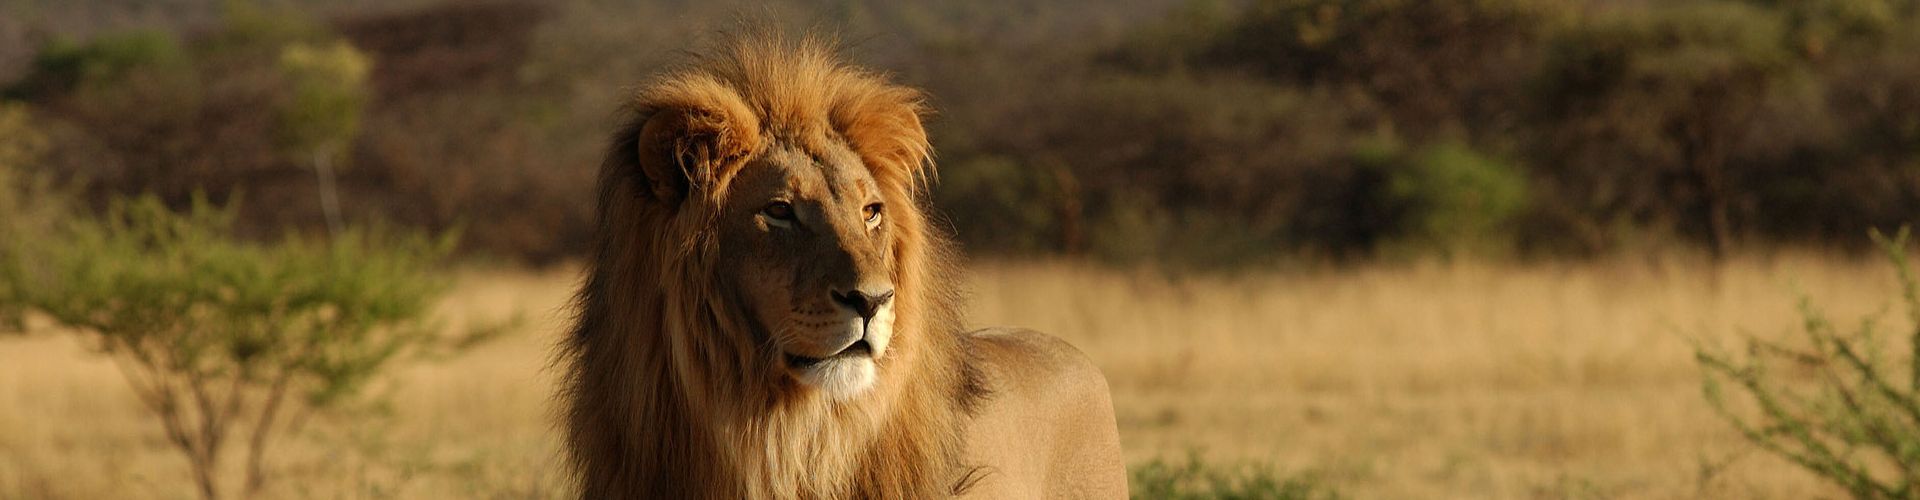 ¡Experimente la calidad de Tanzania Safari Tours con Shemeji Safari!